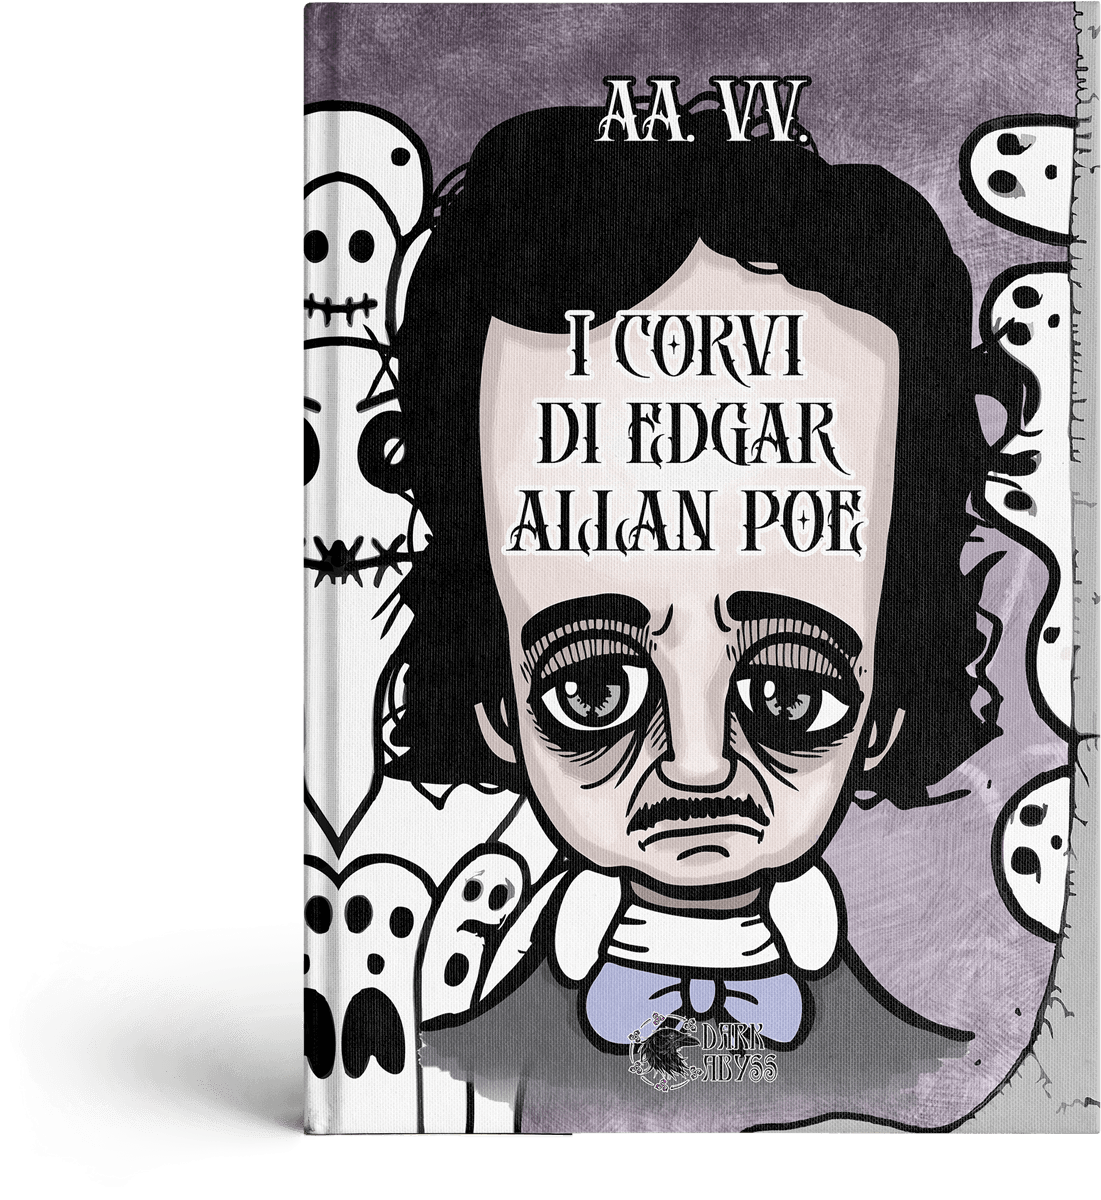 Raccolta di racconti - "I Corvi di Edgar Allan Poe"